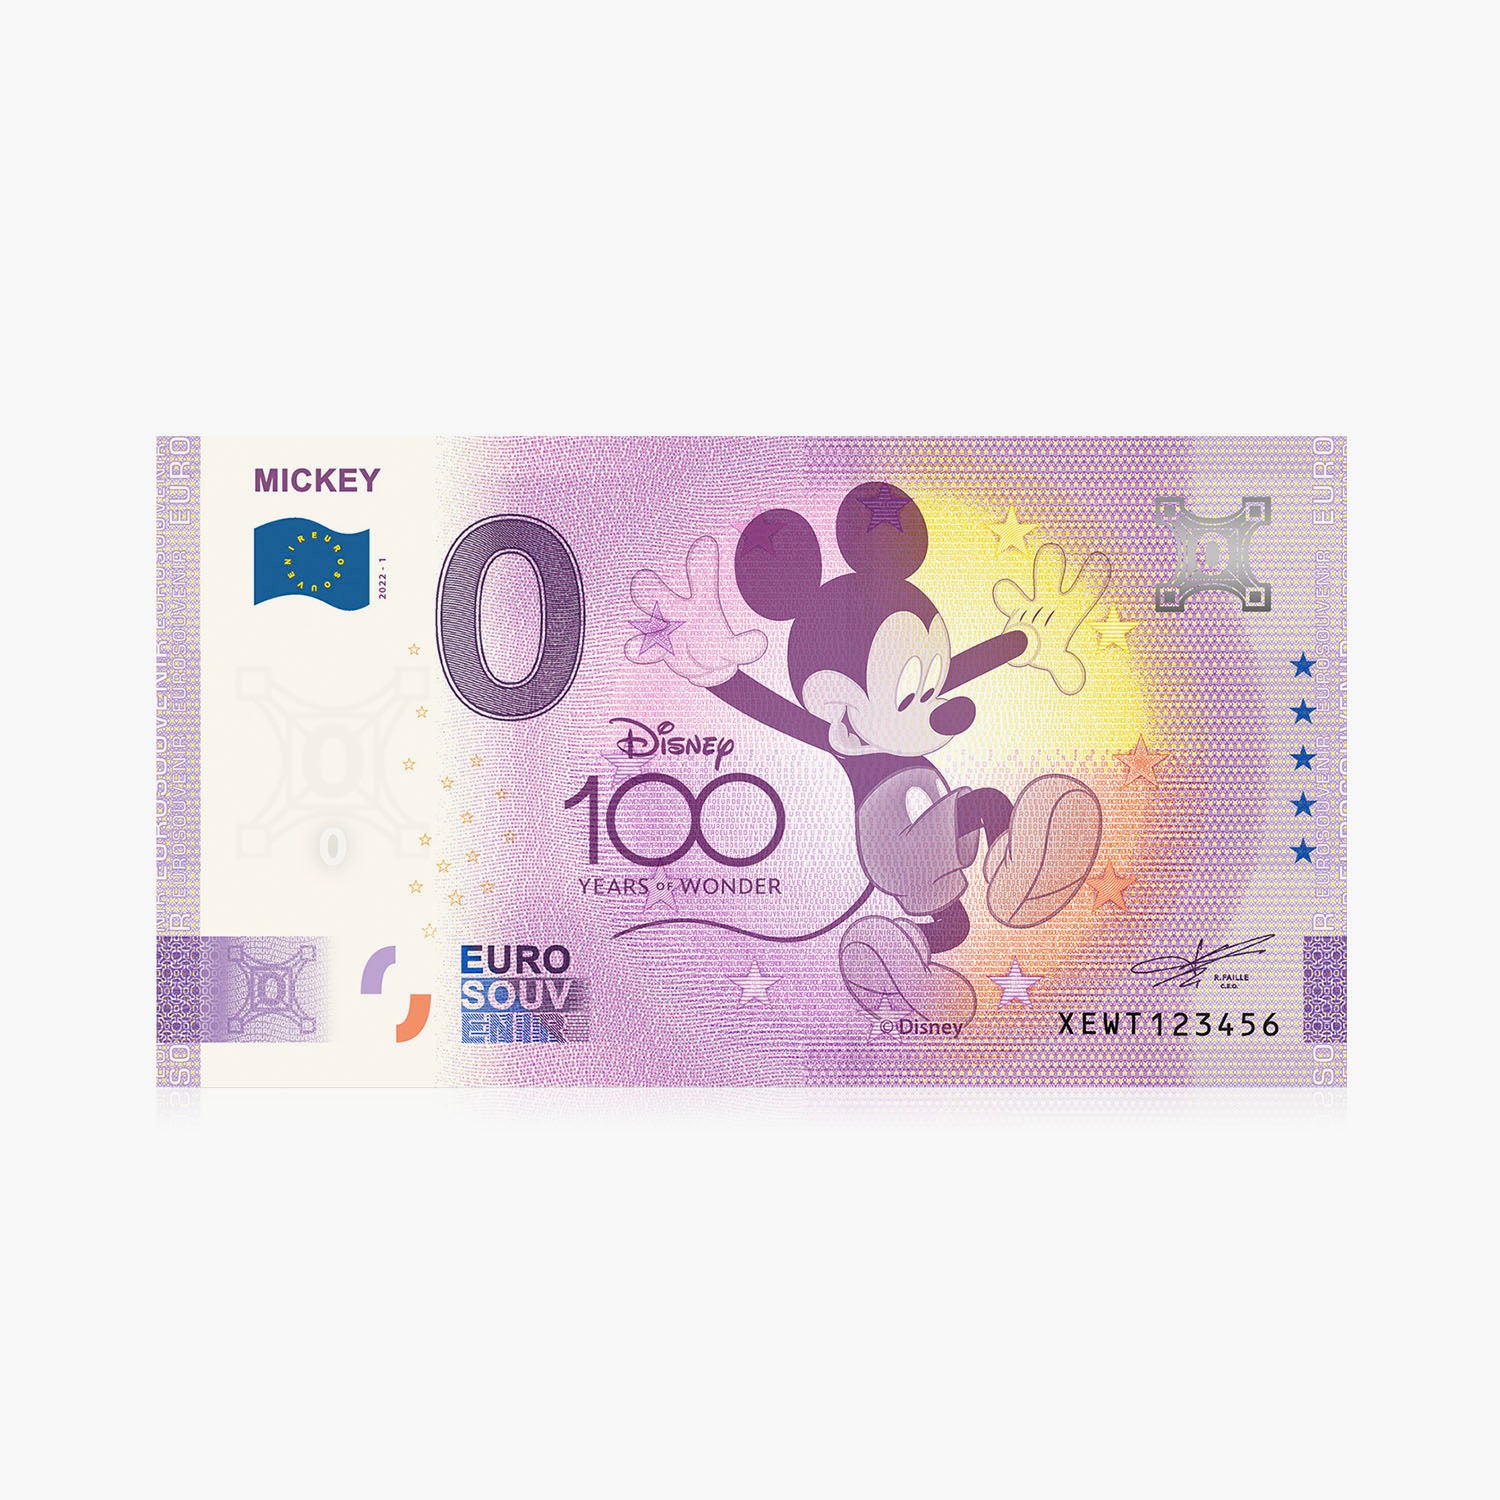 The Disney 100th Anniversary Mickey 0 Euro Banknote